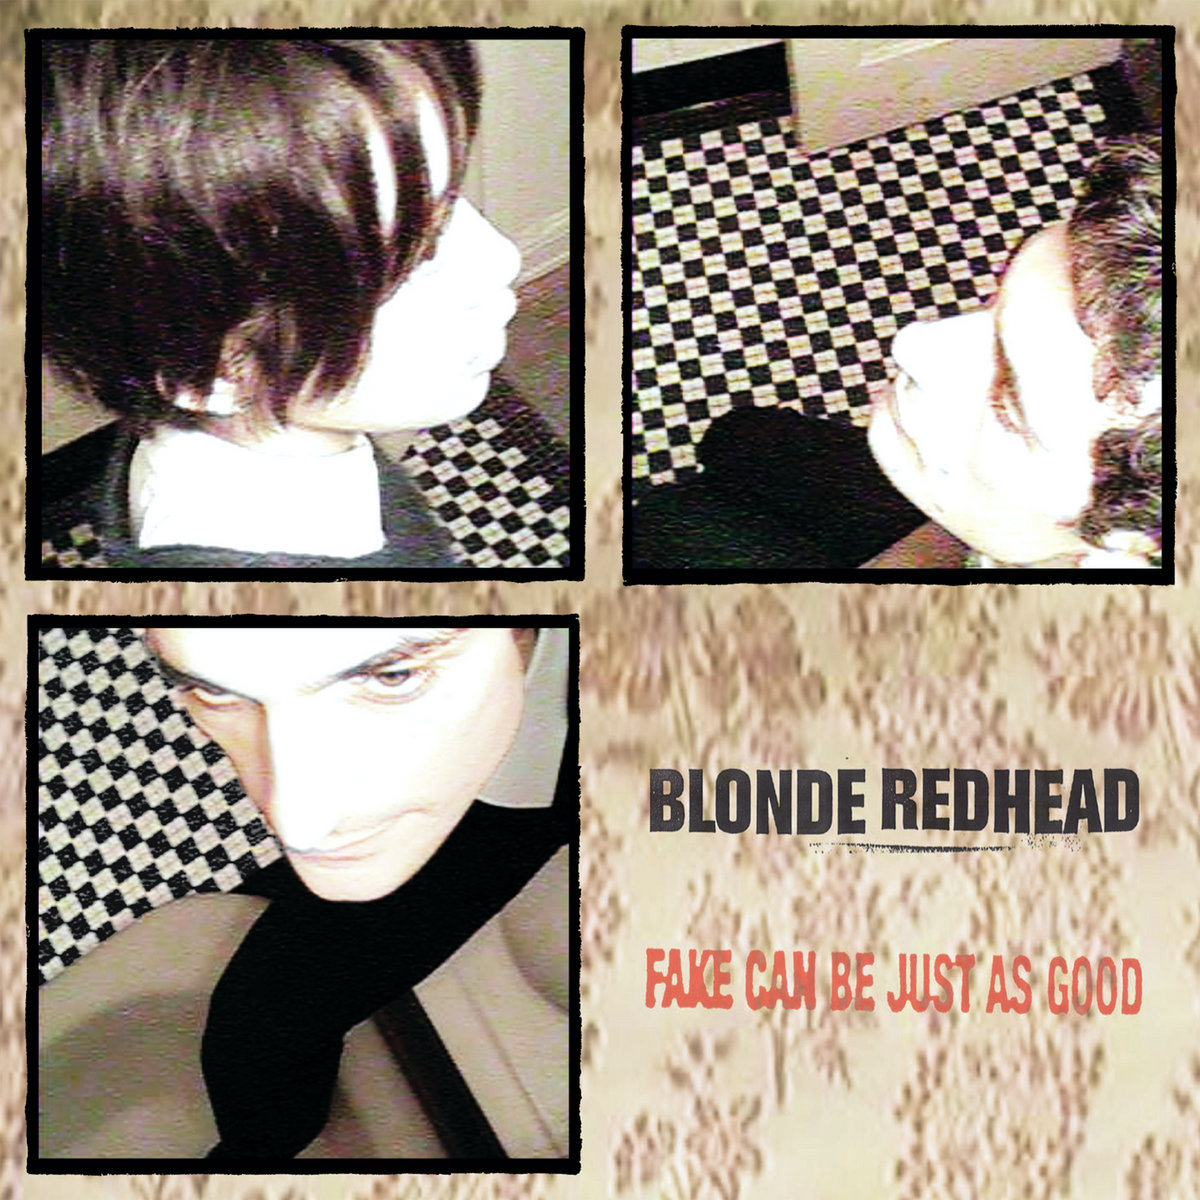 Blonde redhead name